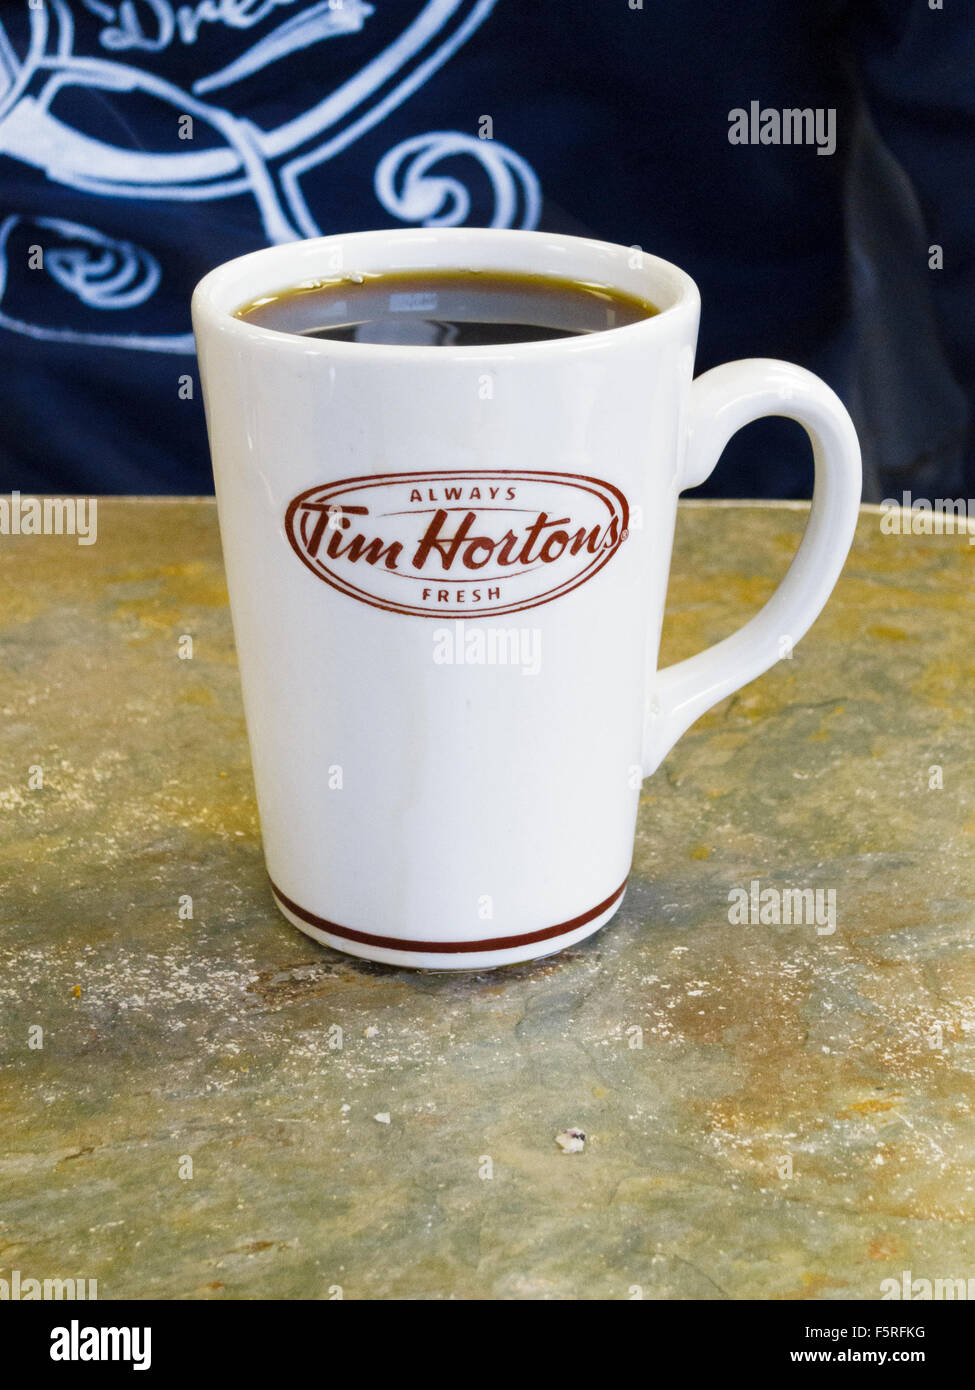 Tim Hortons coffee mug Stock Photo